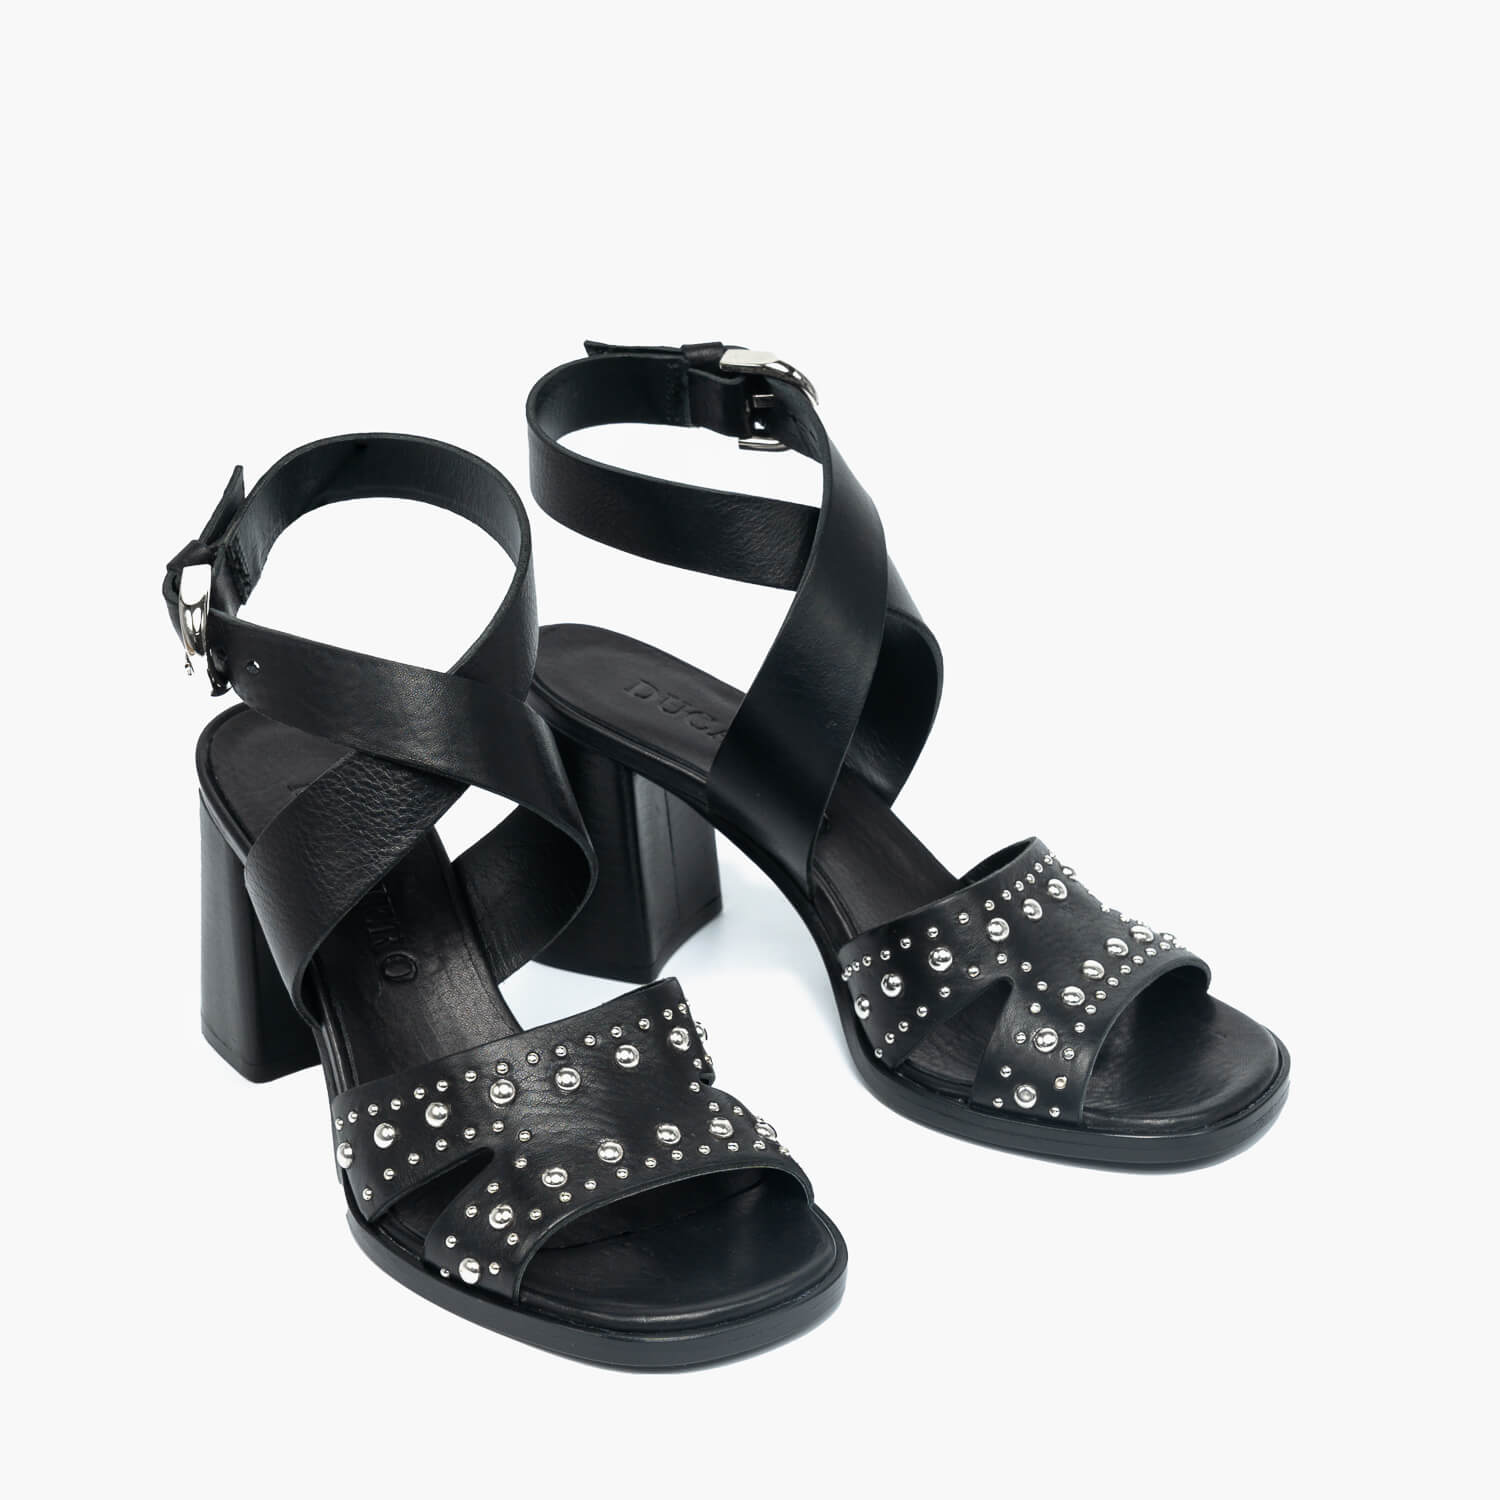 Beatrice | Model 3736 sandals black